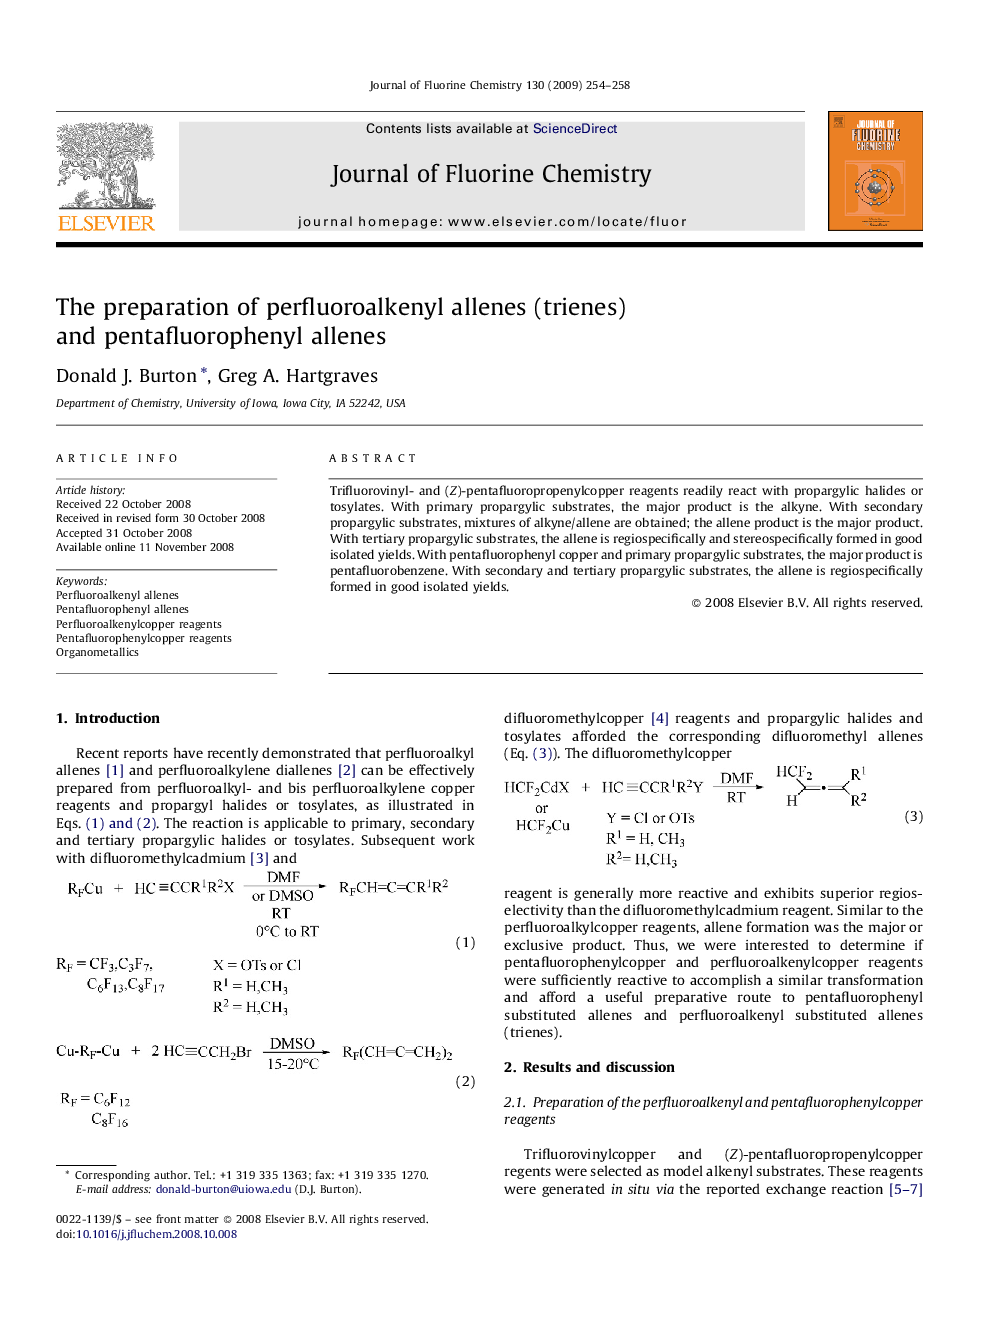 The preparation of perfluoroalkenyl allenes (trienes) and pentafluorophenyl allenes